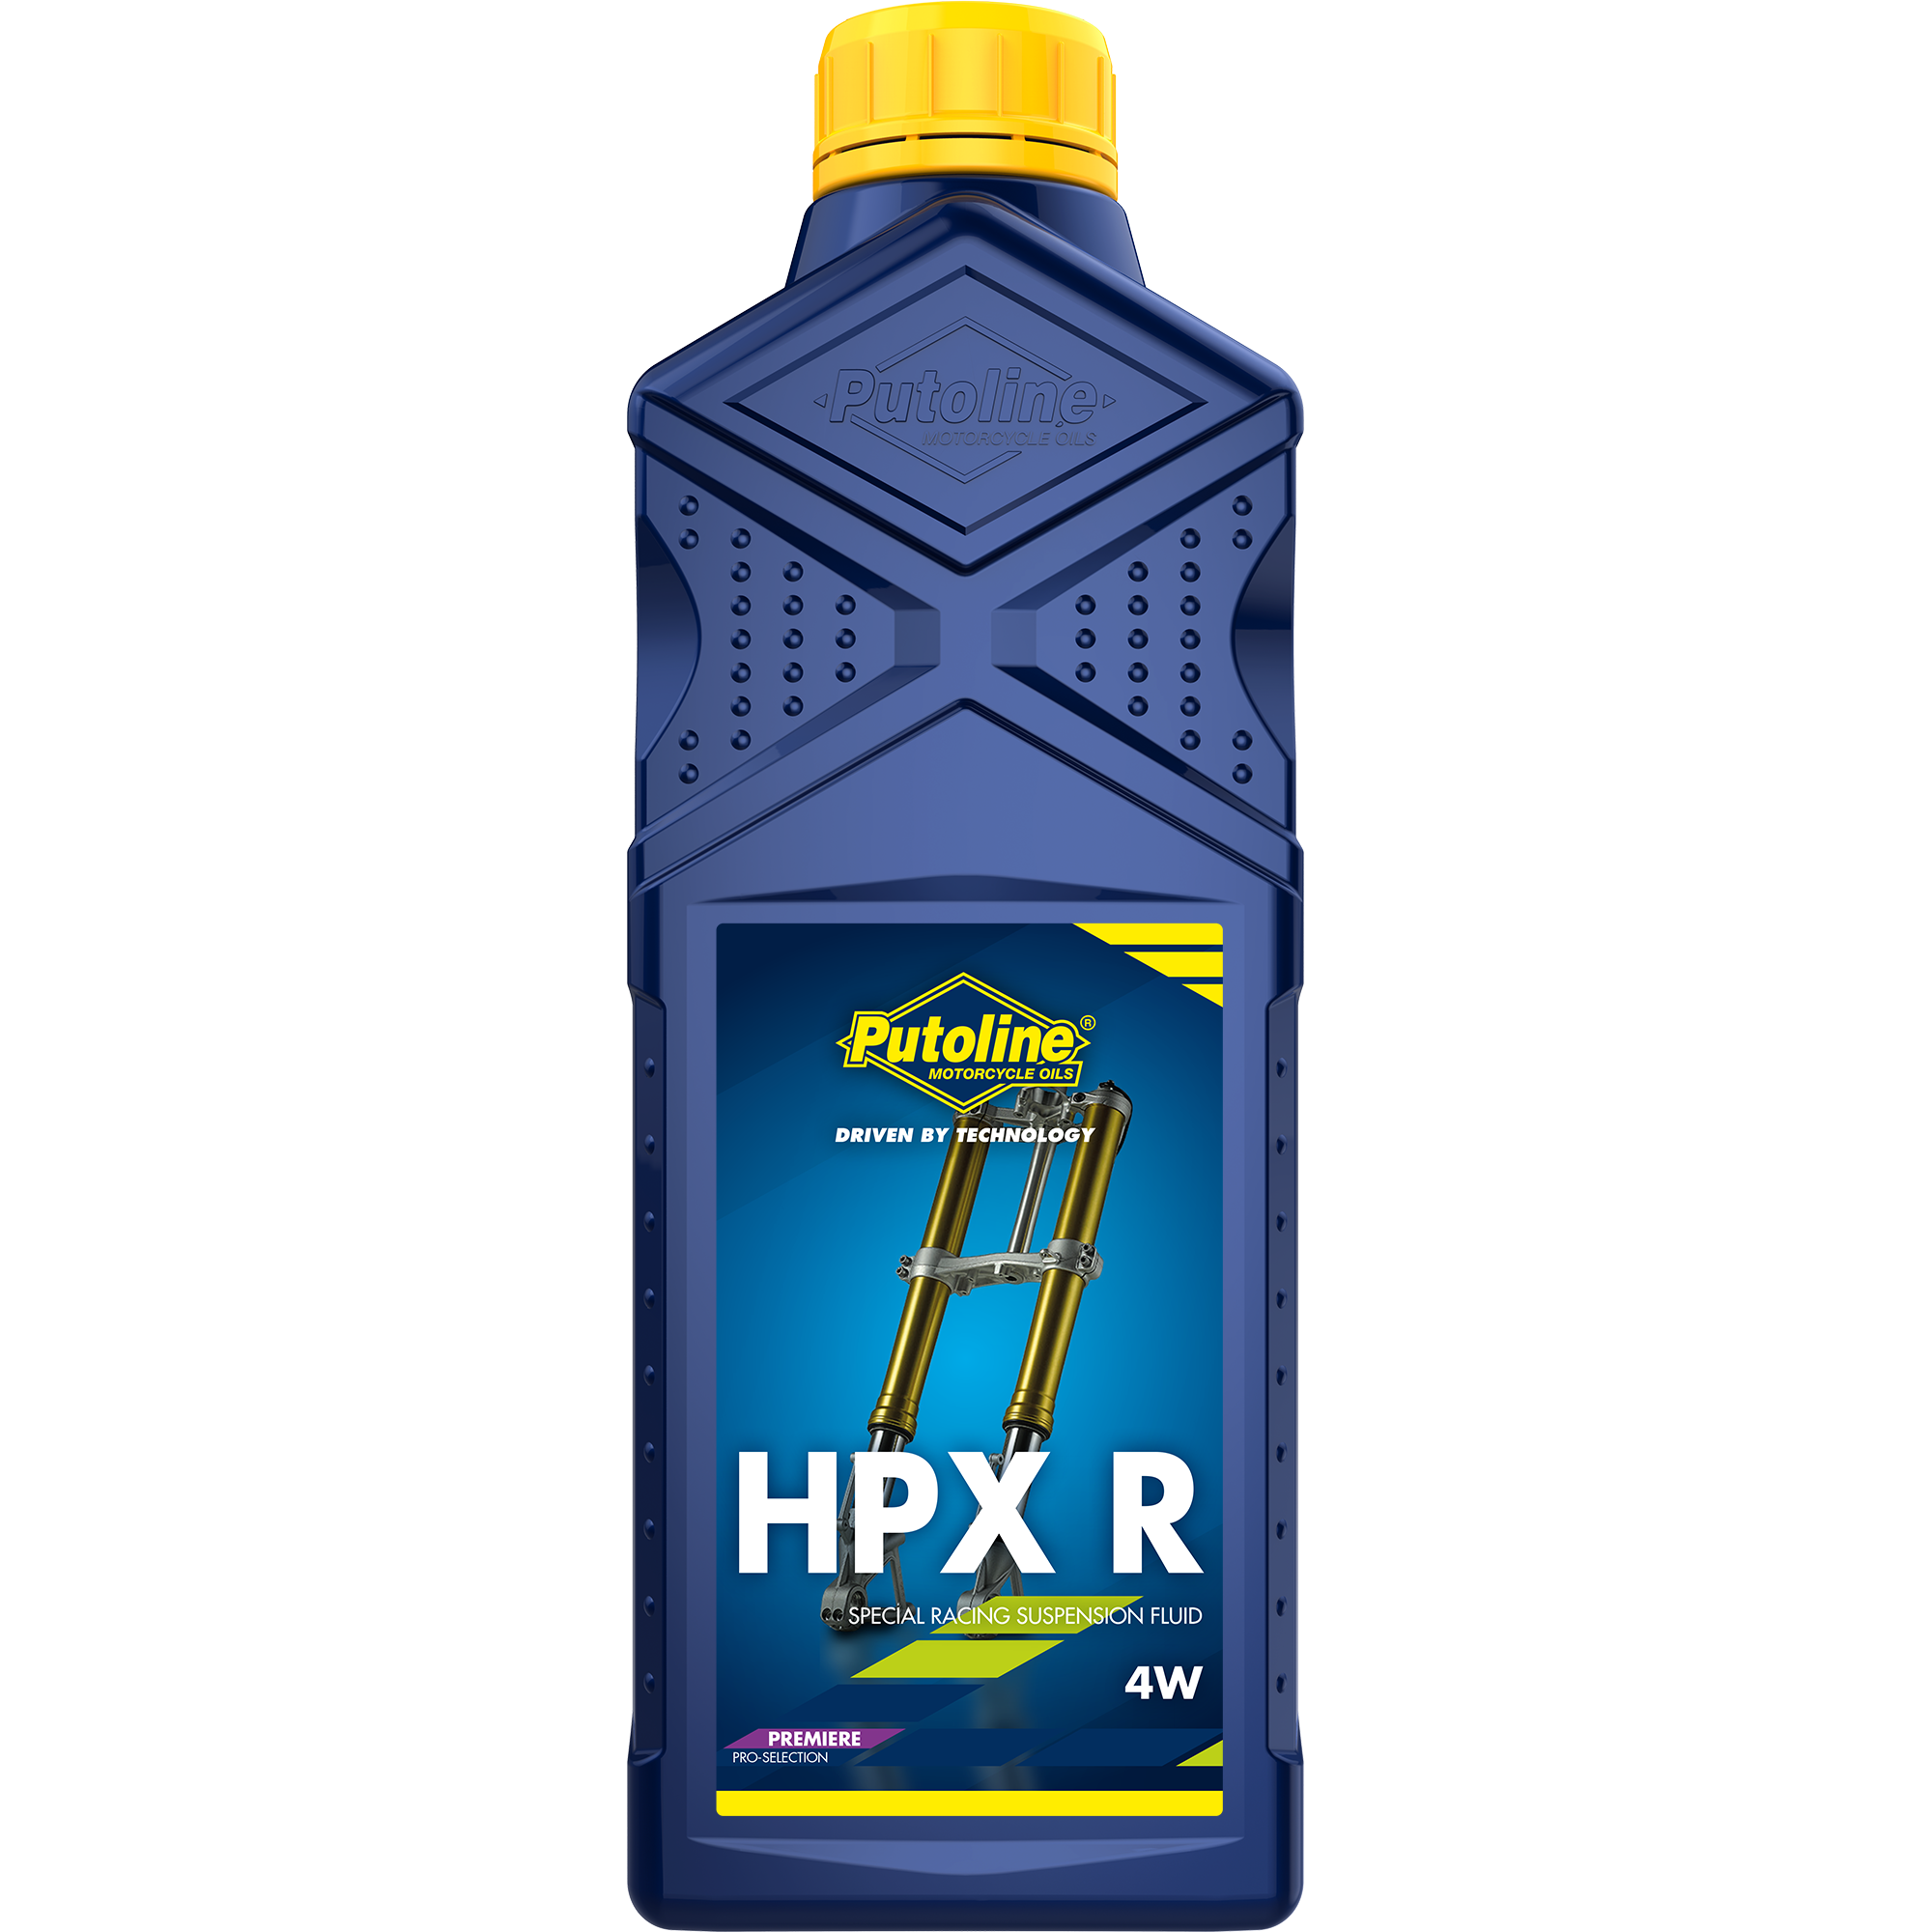 Putoline HPX R 4W, 12 x 1 lt detail 2